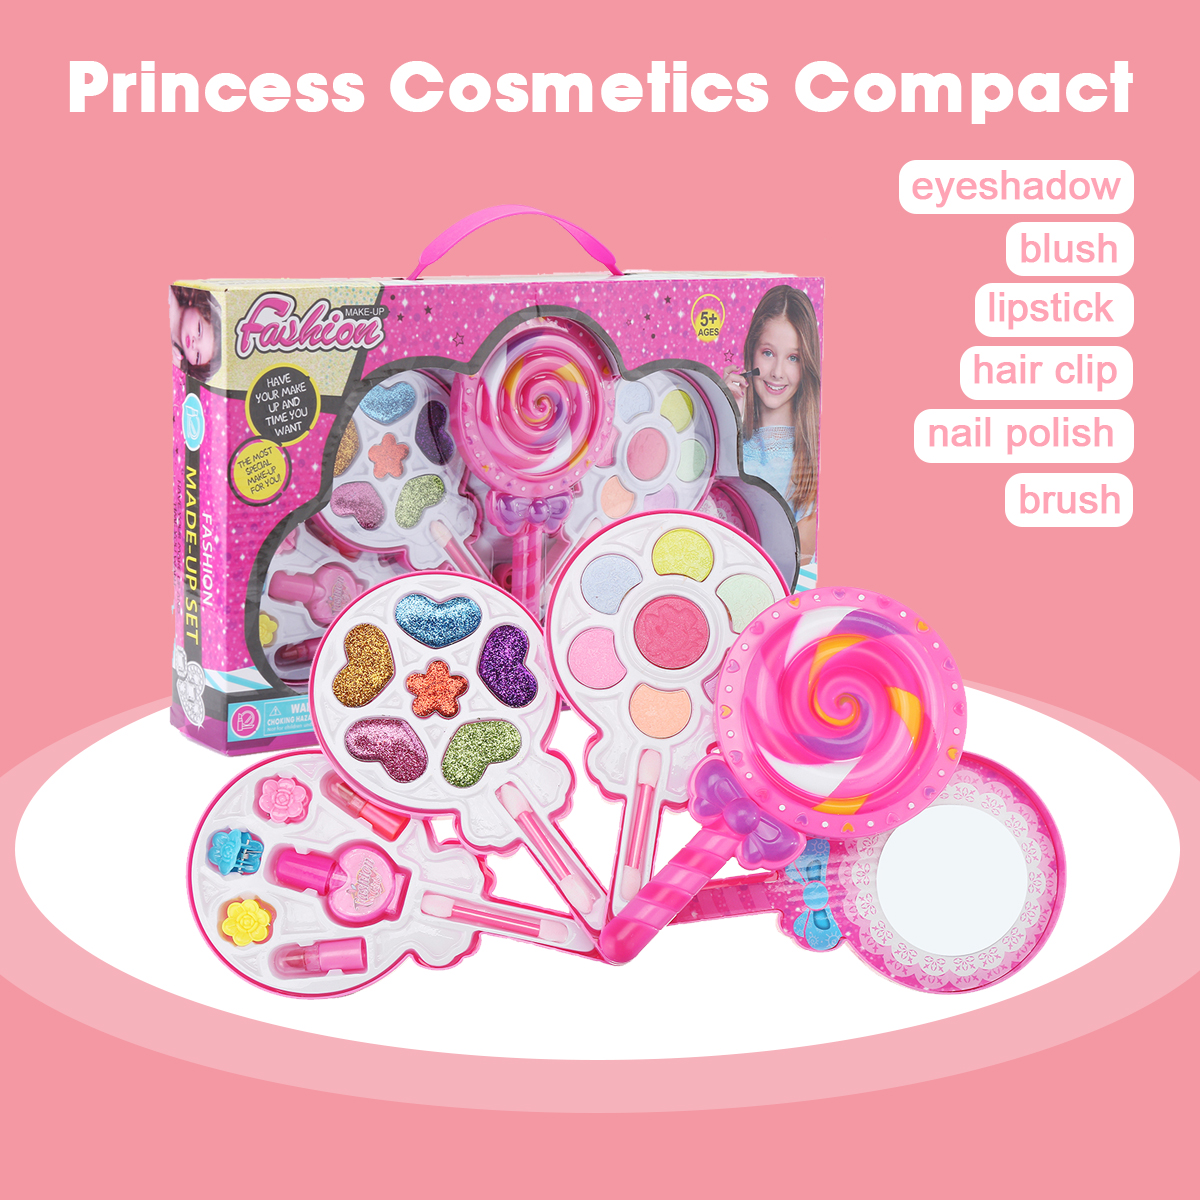 Girls-Make-Up-Toy-Set-Lollipop-Shaped-Princess-Pink-Beauty-Cosmetics-Compact-Kids-Gift-1830188-1